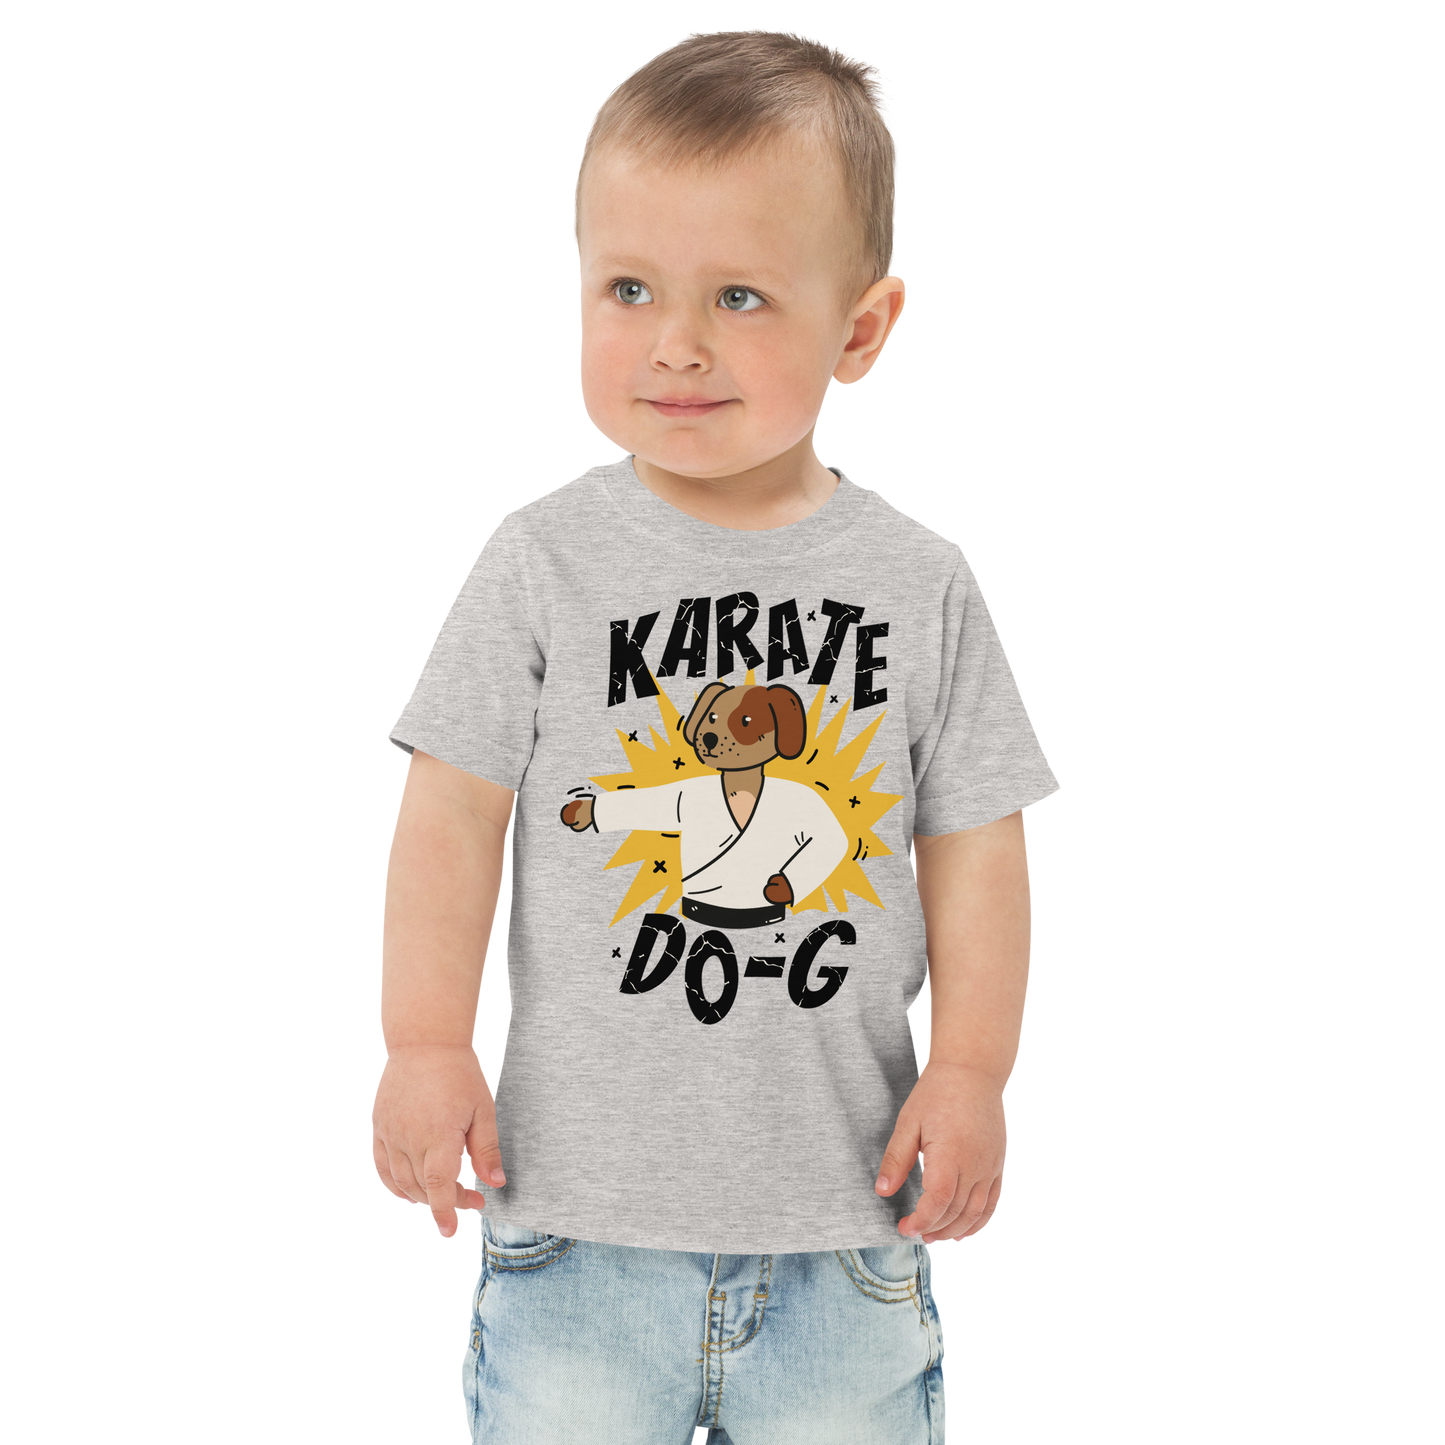 Karate do-g dog | Toddler jersey t-shirt